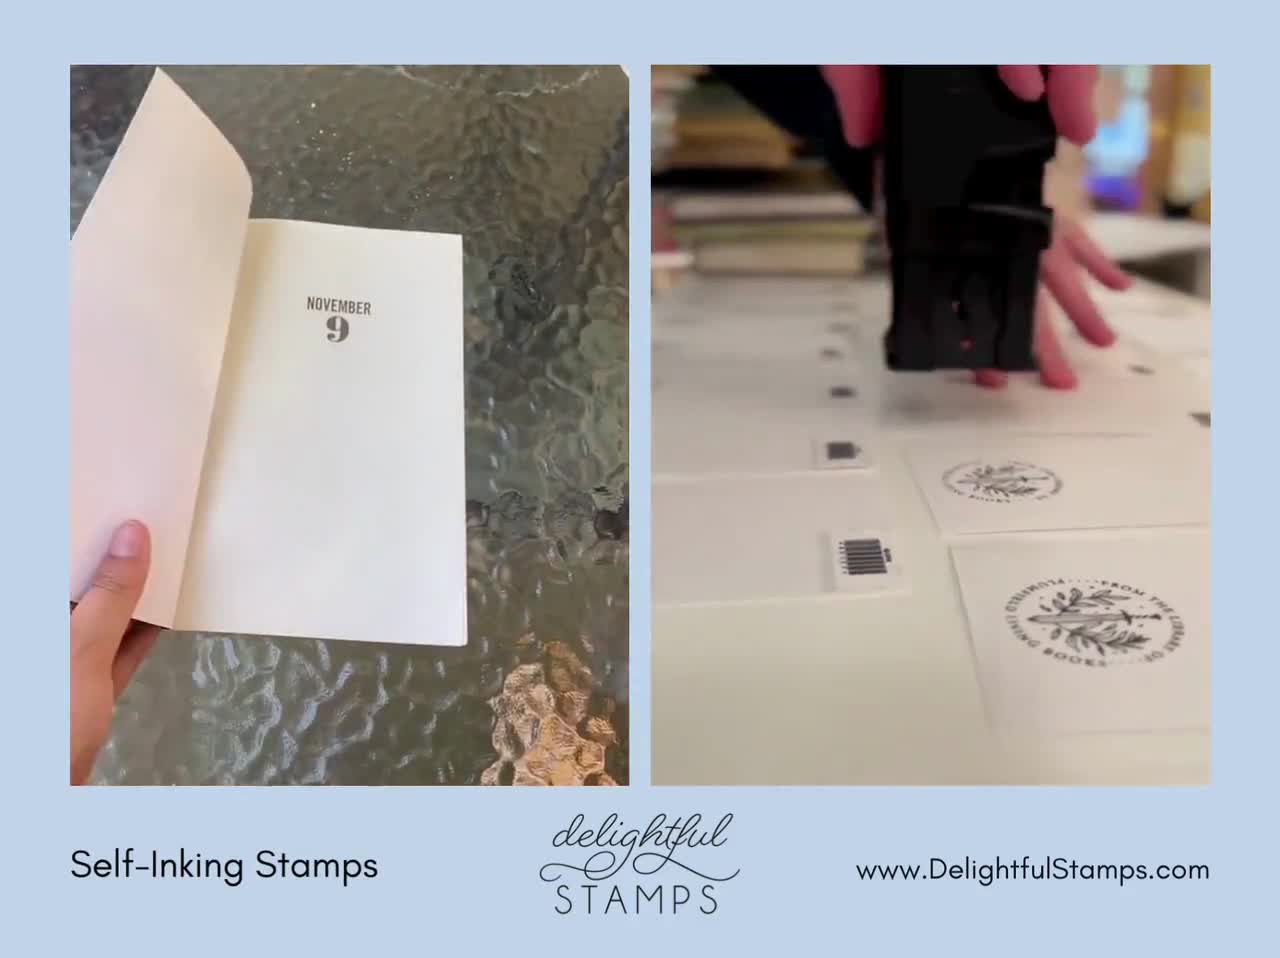 Handmade by Custom Name Business Stamp - HC Brands